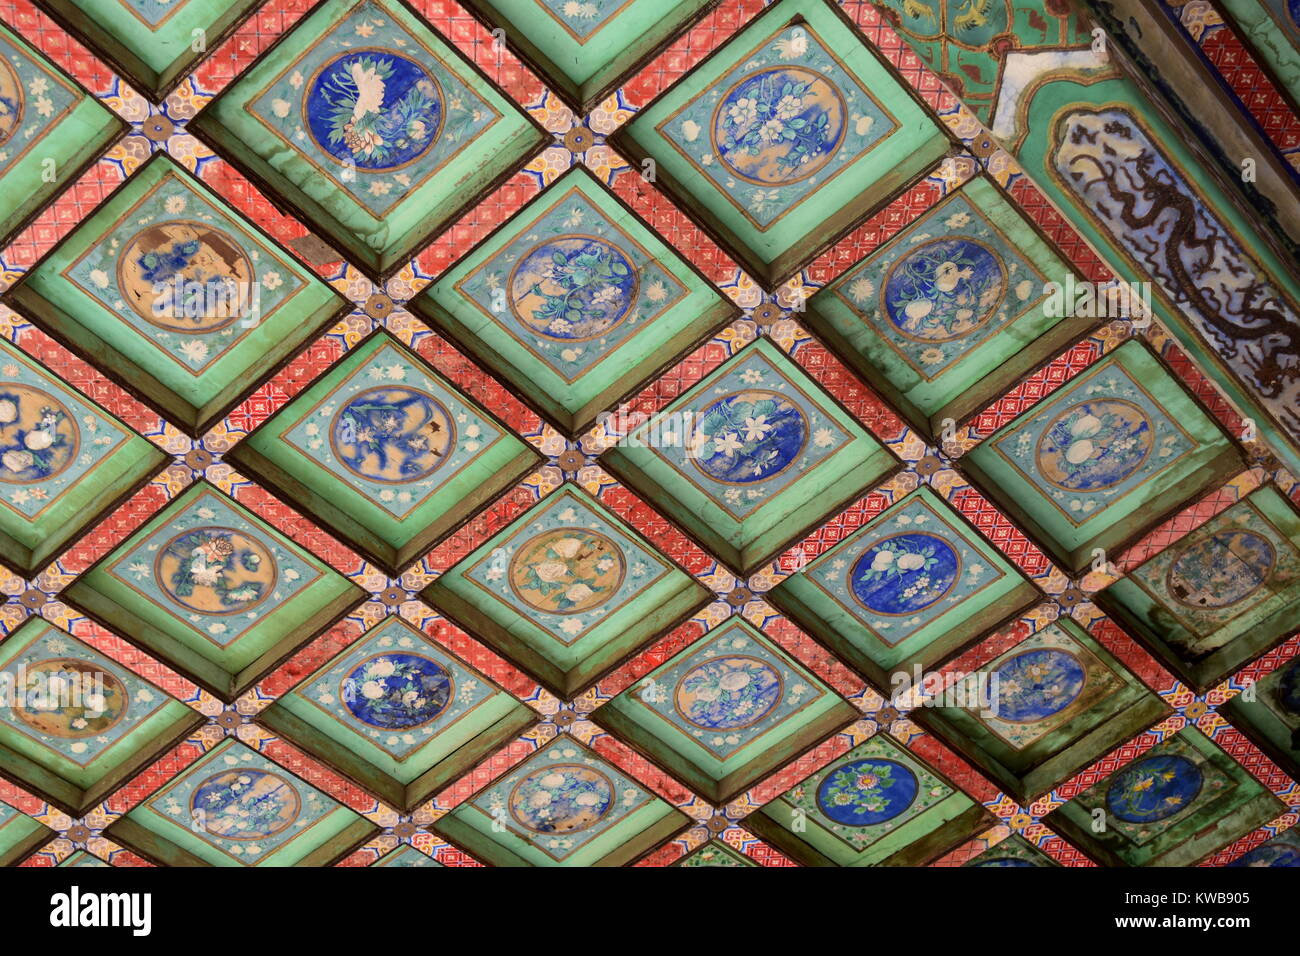 Beautiful Chinese art on Forbidden City palace ceiling - Beijing, China Stock Photo